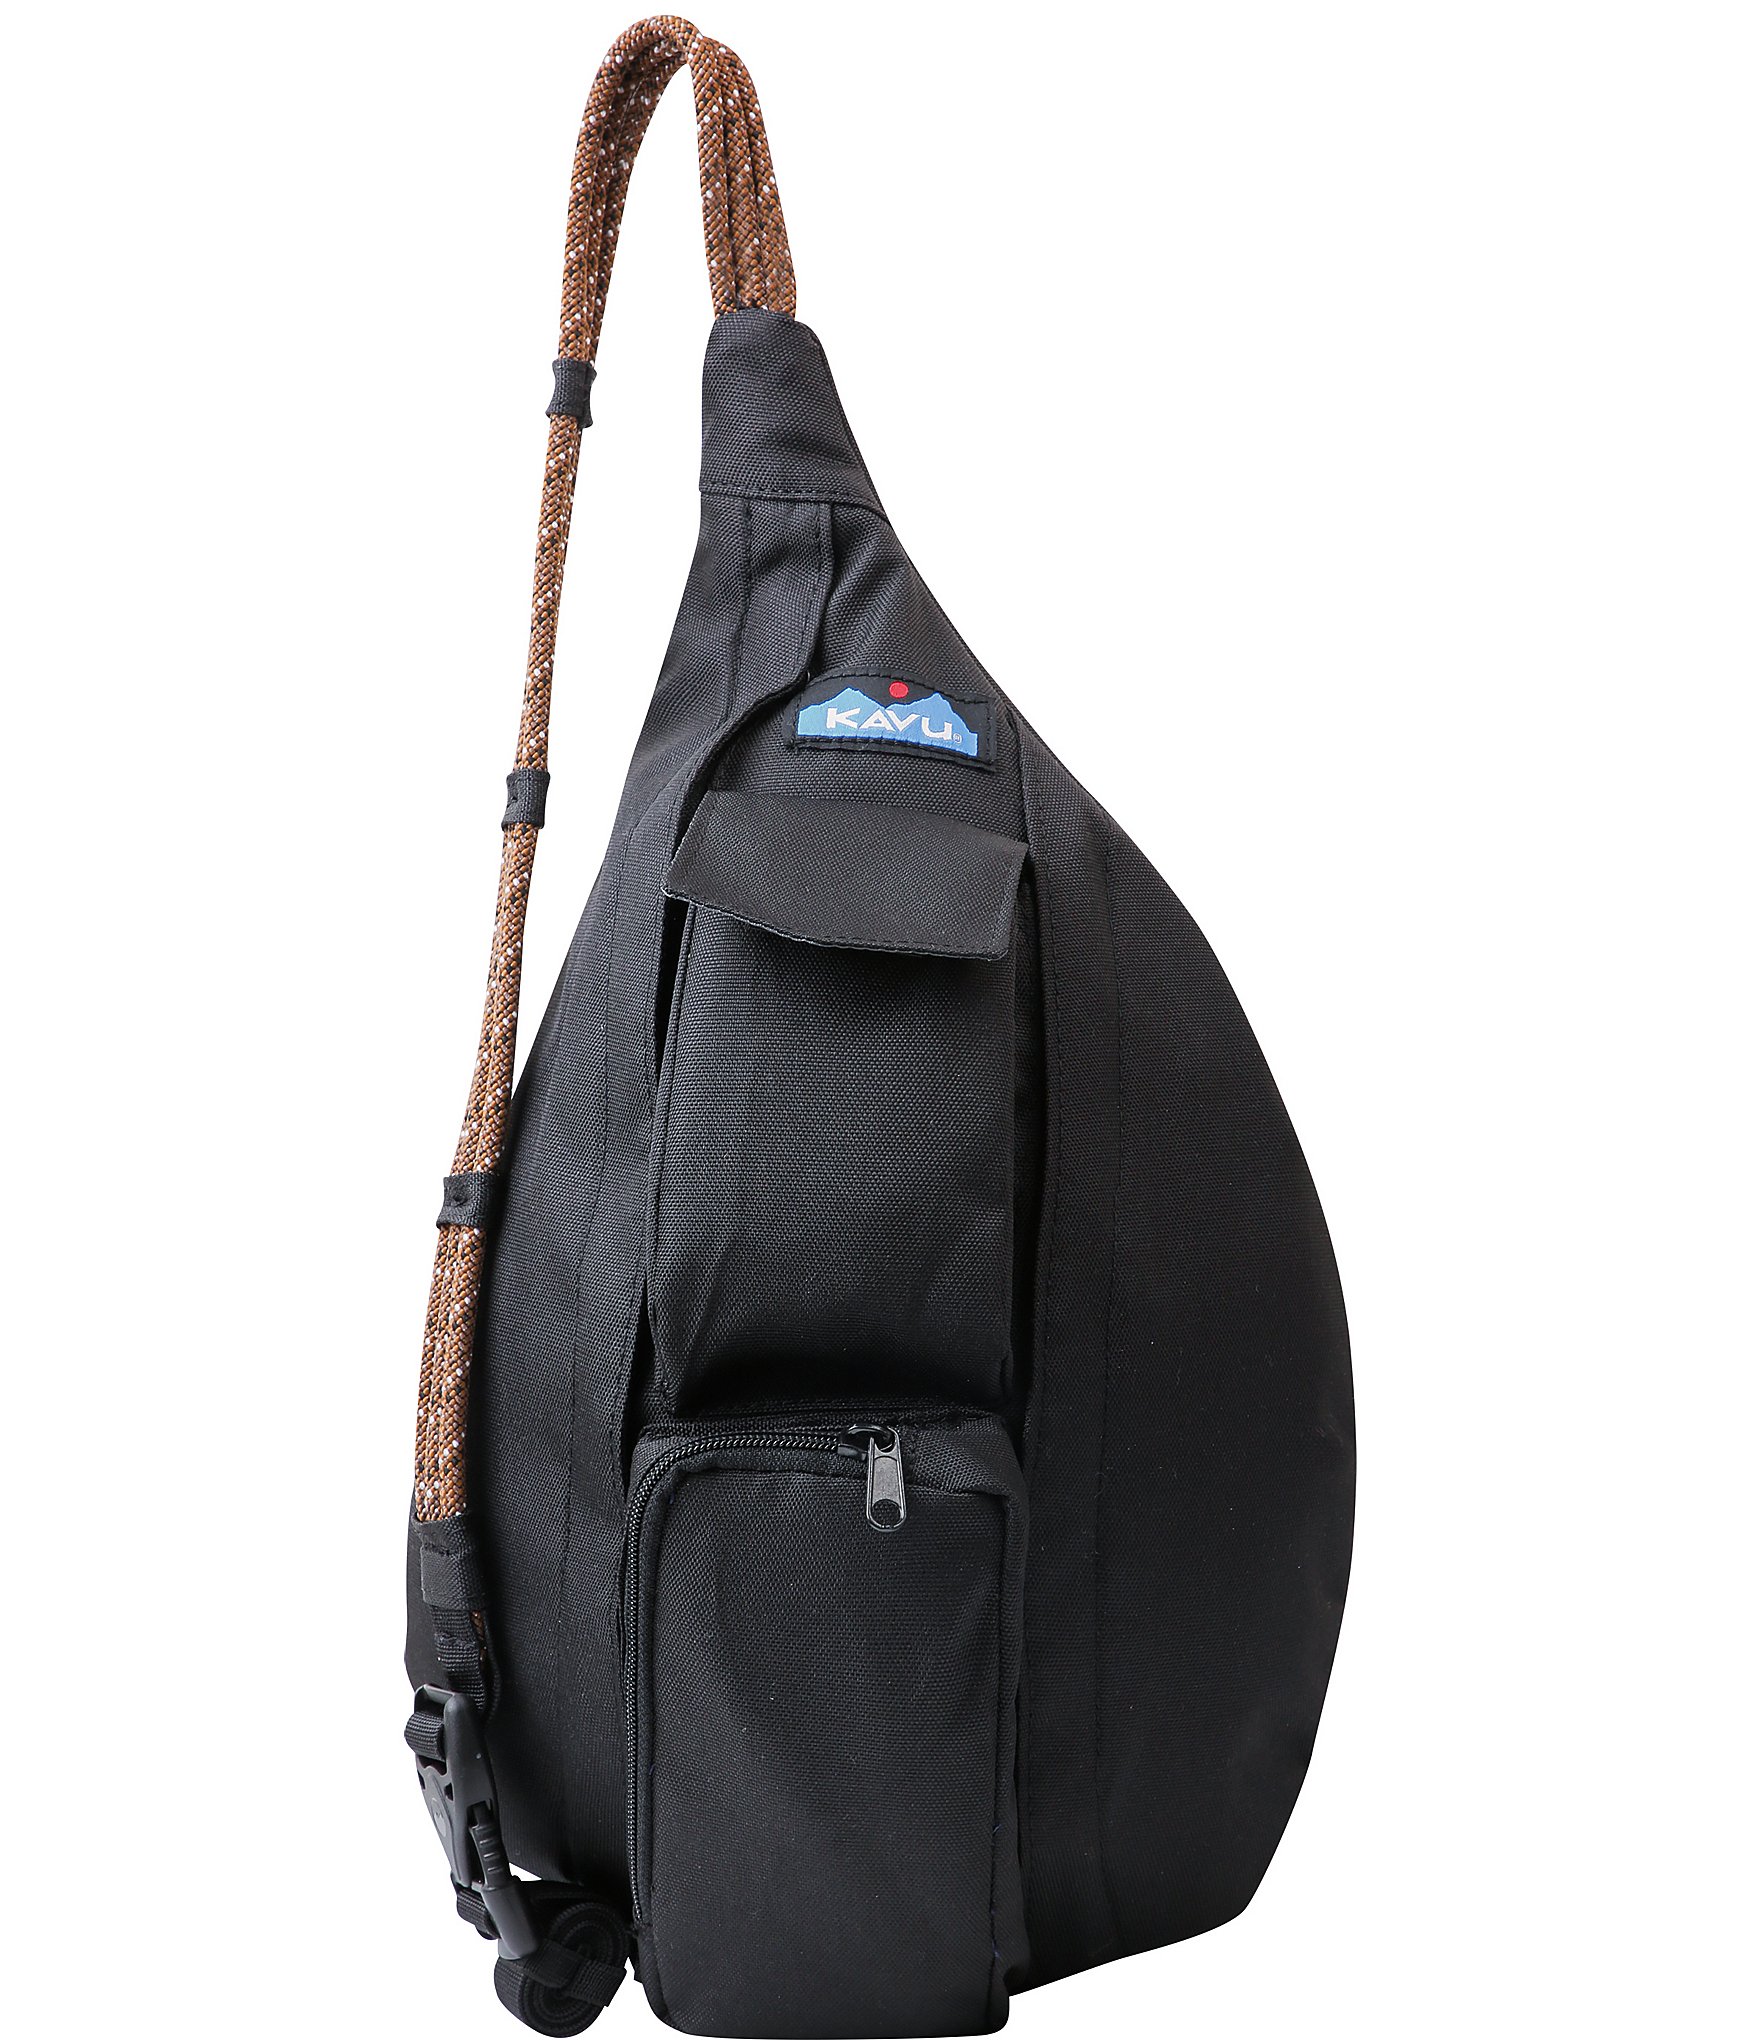  KAVU Rope Bag, Black,One Size : Clothing, Shoes & Jewelry